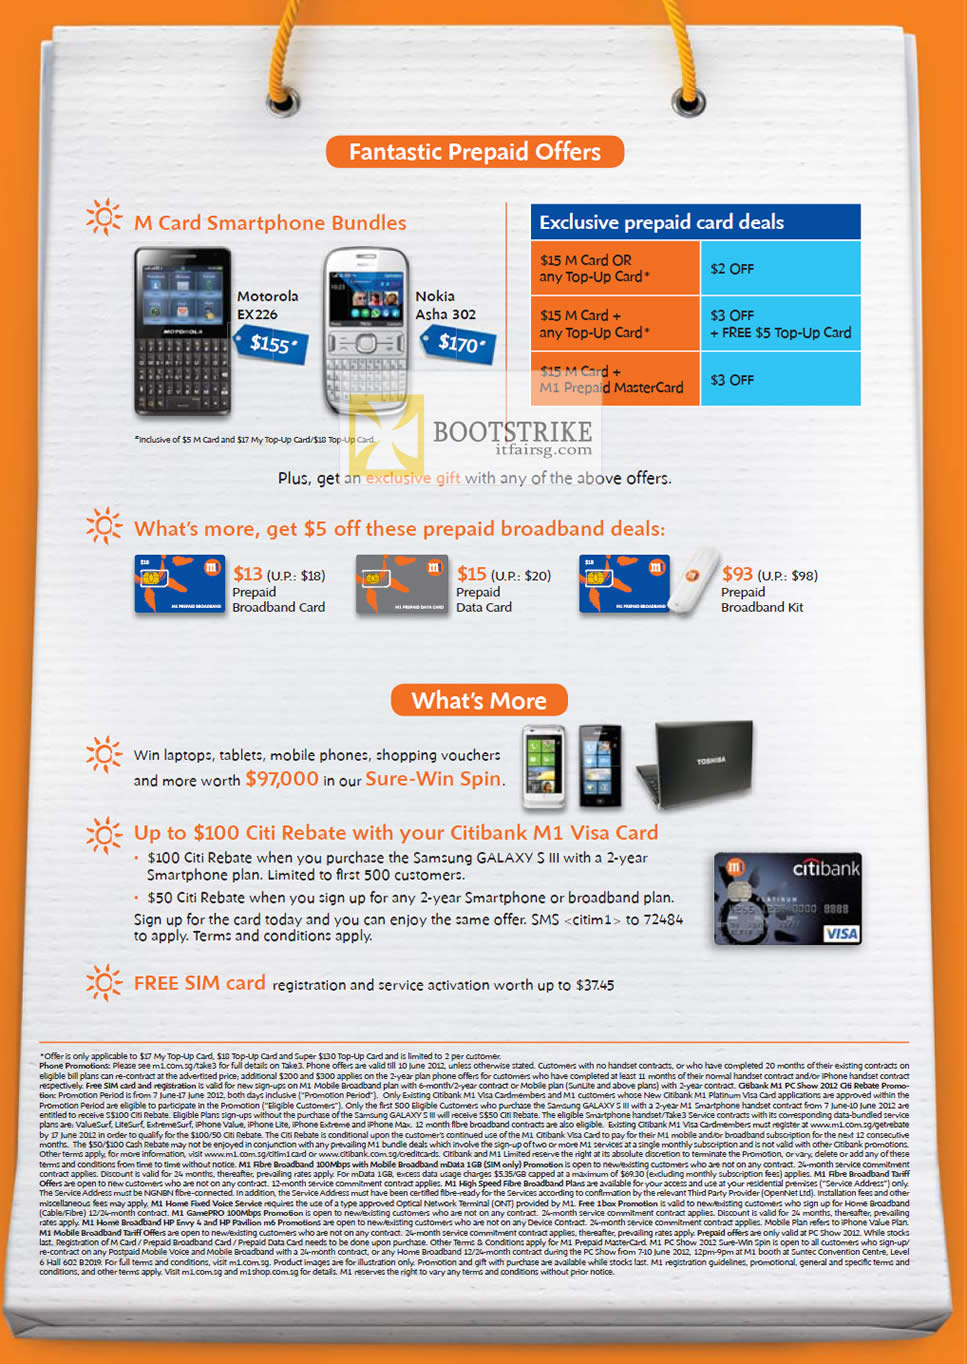 PC SHOW 2012 price list image brochure of M1 Mobile Prepaid M Card Motorola EX226, Nokia Asha 302, Prepaid Mobile Broadband, Citi Rebate